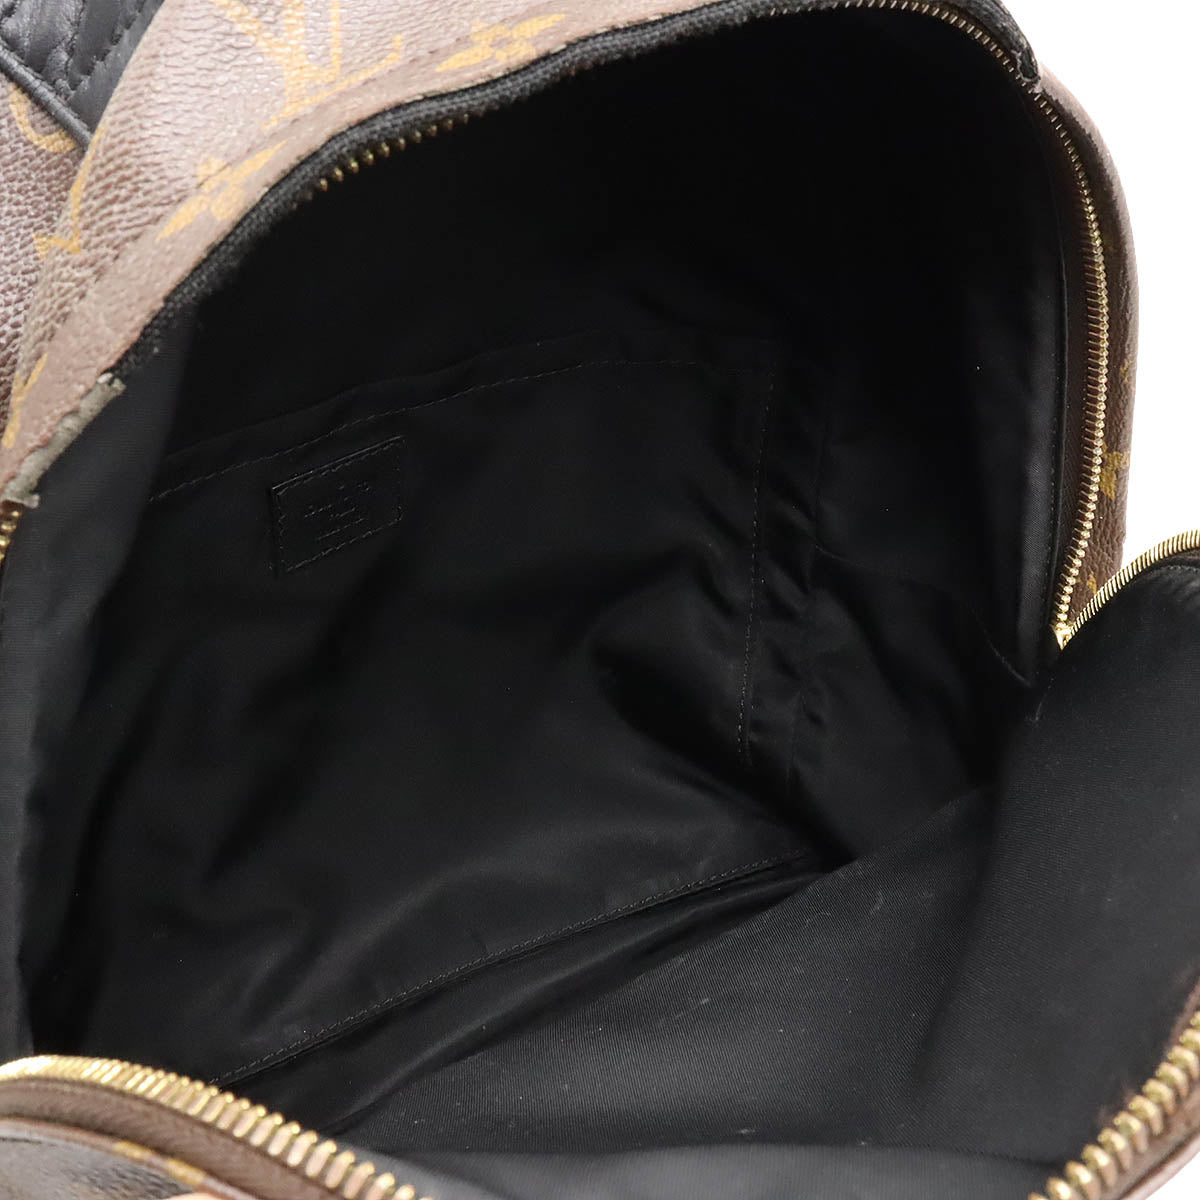 Louis Vuitton Monogram Palm Springs MM Backpack Rucksack Shoulder Bag Leather M41561